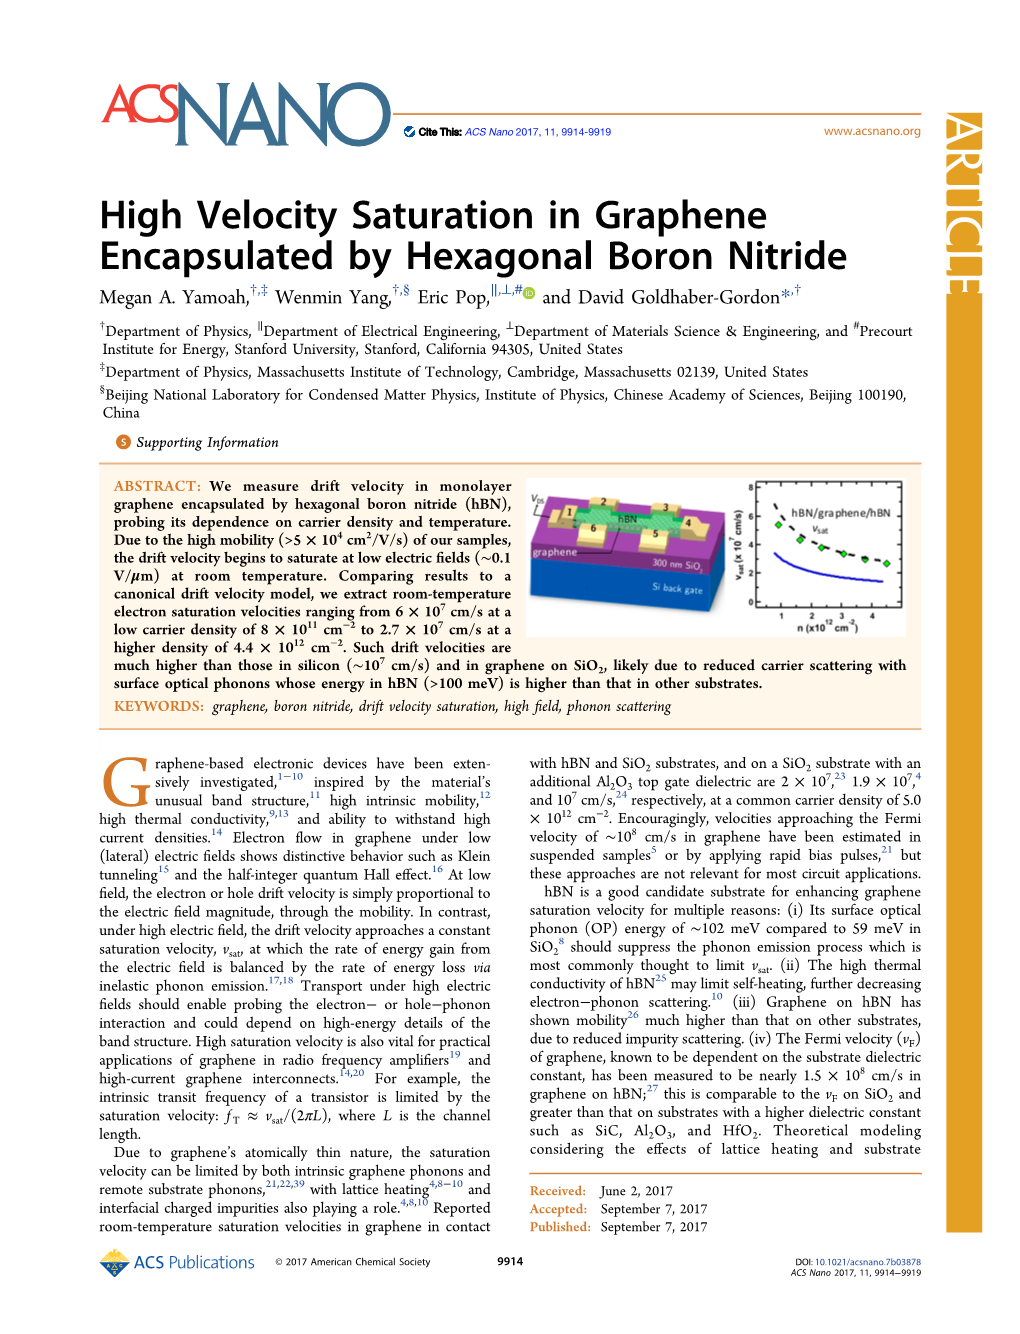 High-Velocity Saturation in Graphene Encapsulated by Hexagonal Boron